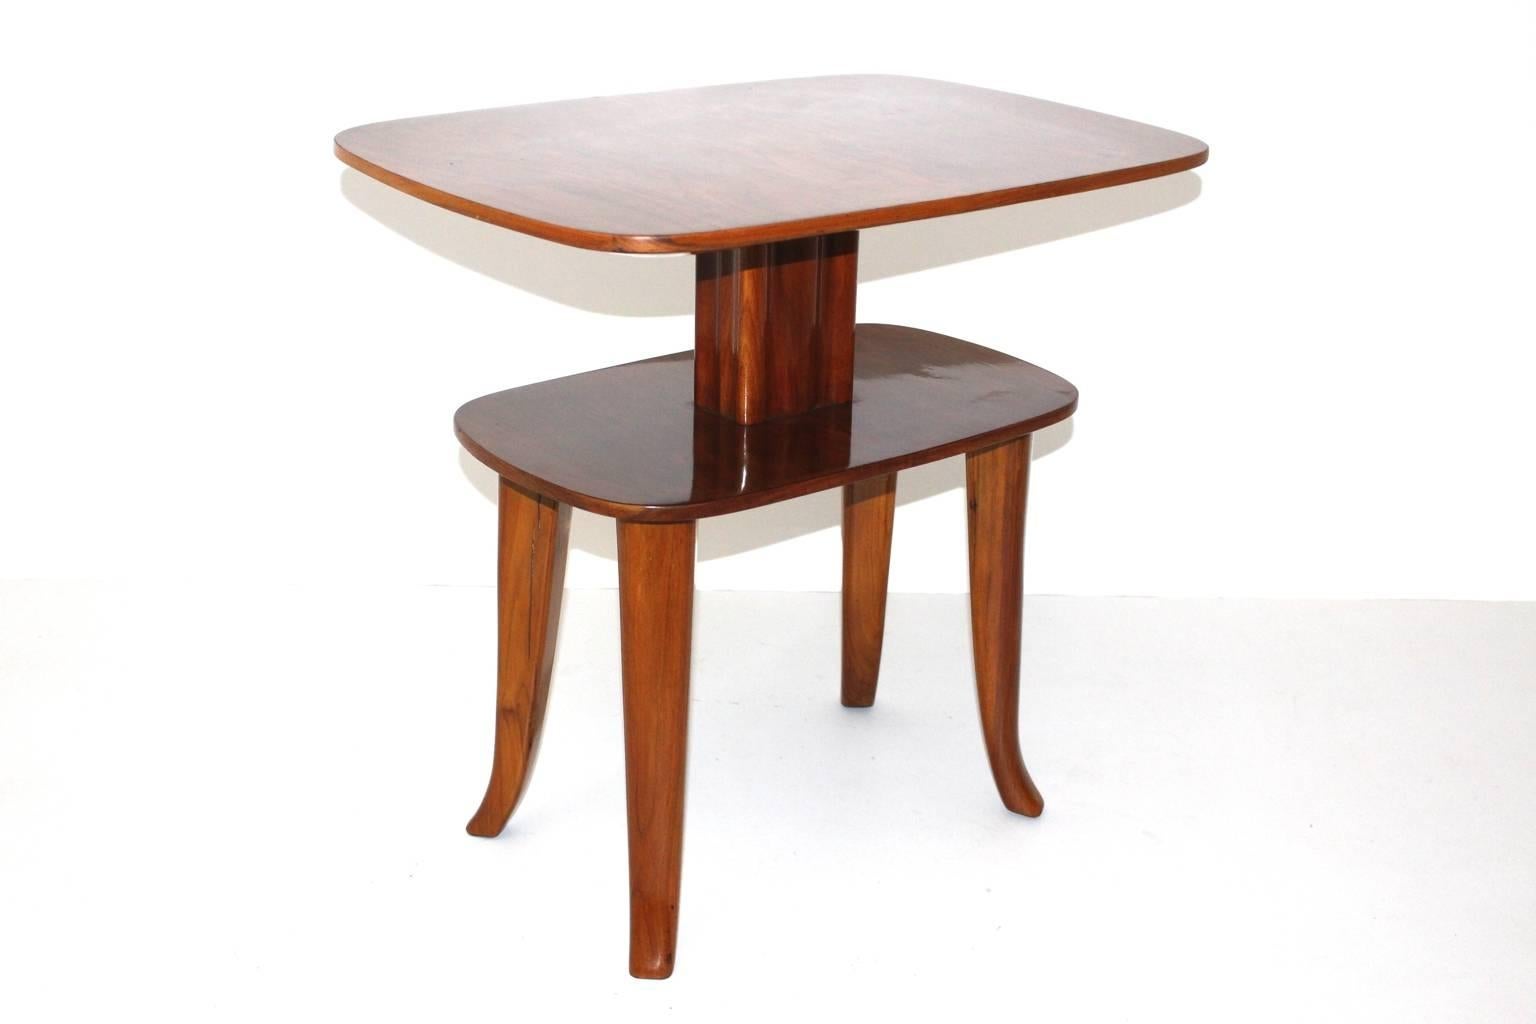 Austrian Art Deco Vintage Walnut Side Table Coffee Table Style Josef Frank c 1925 Austria